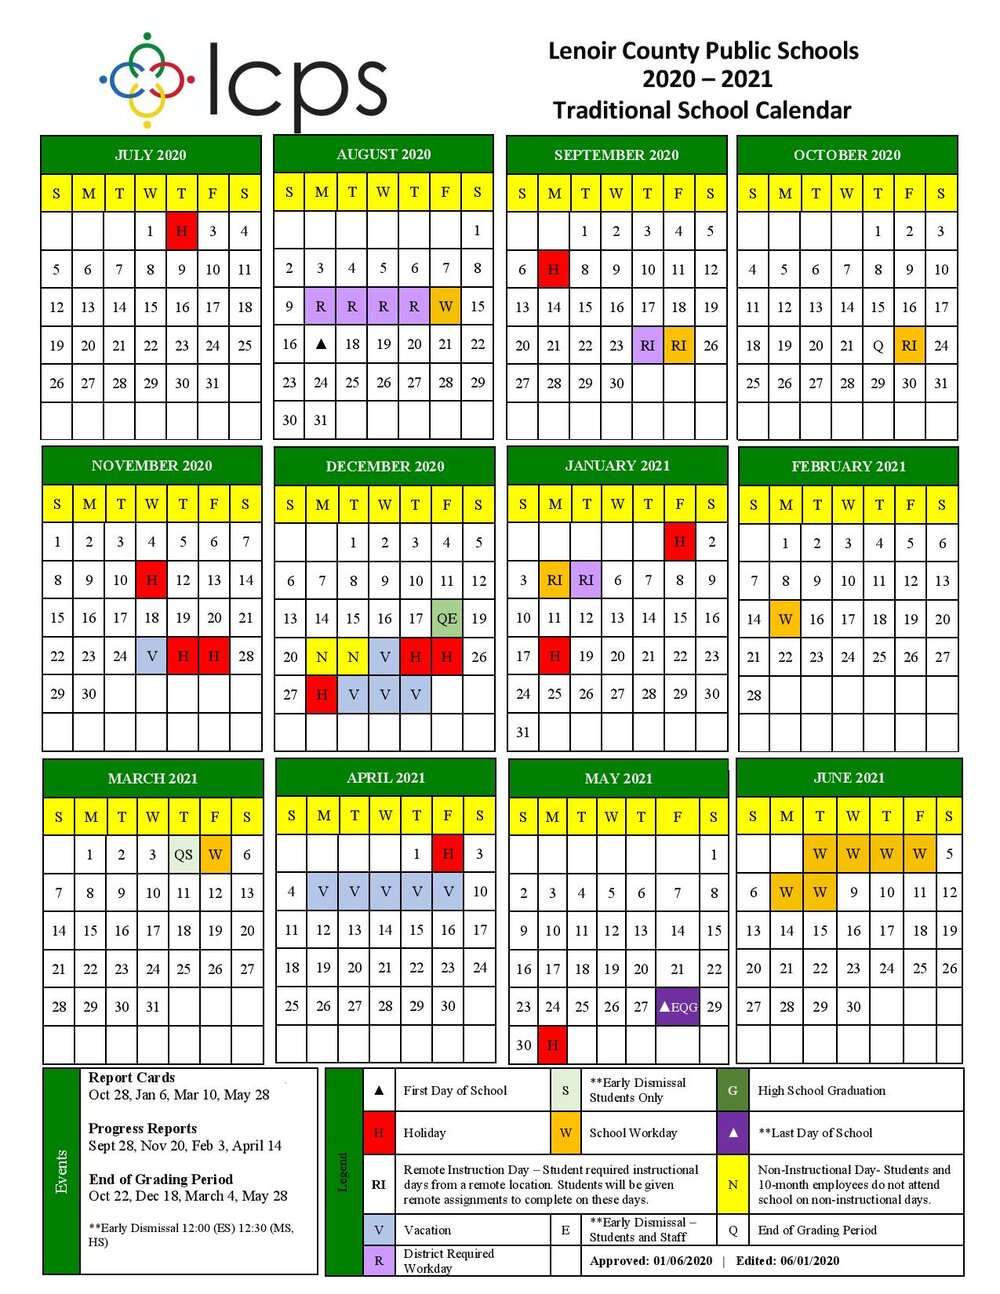 Howard County Public Schools Calendar Dates Only